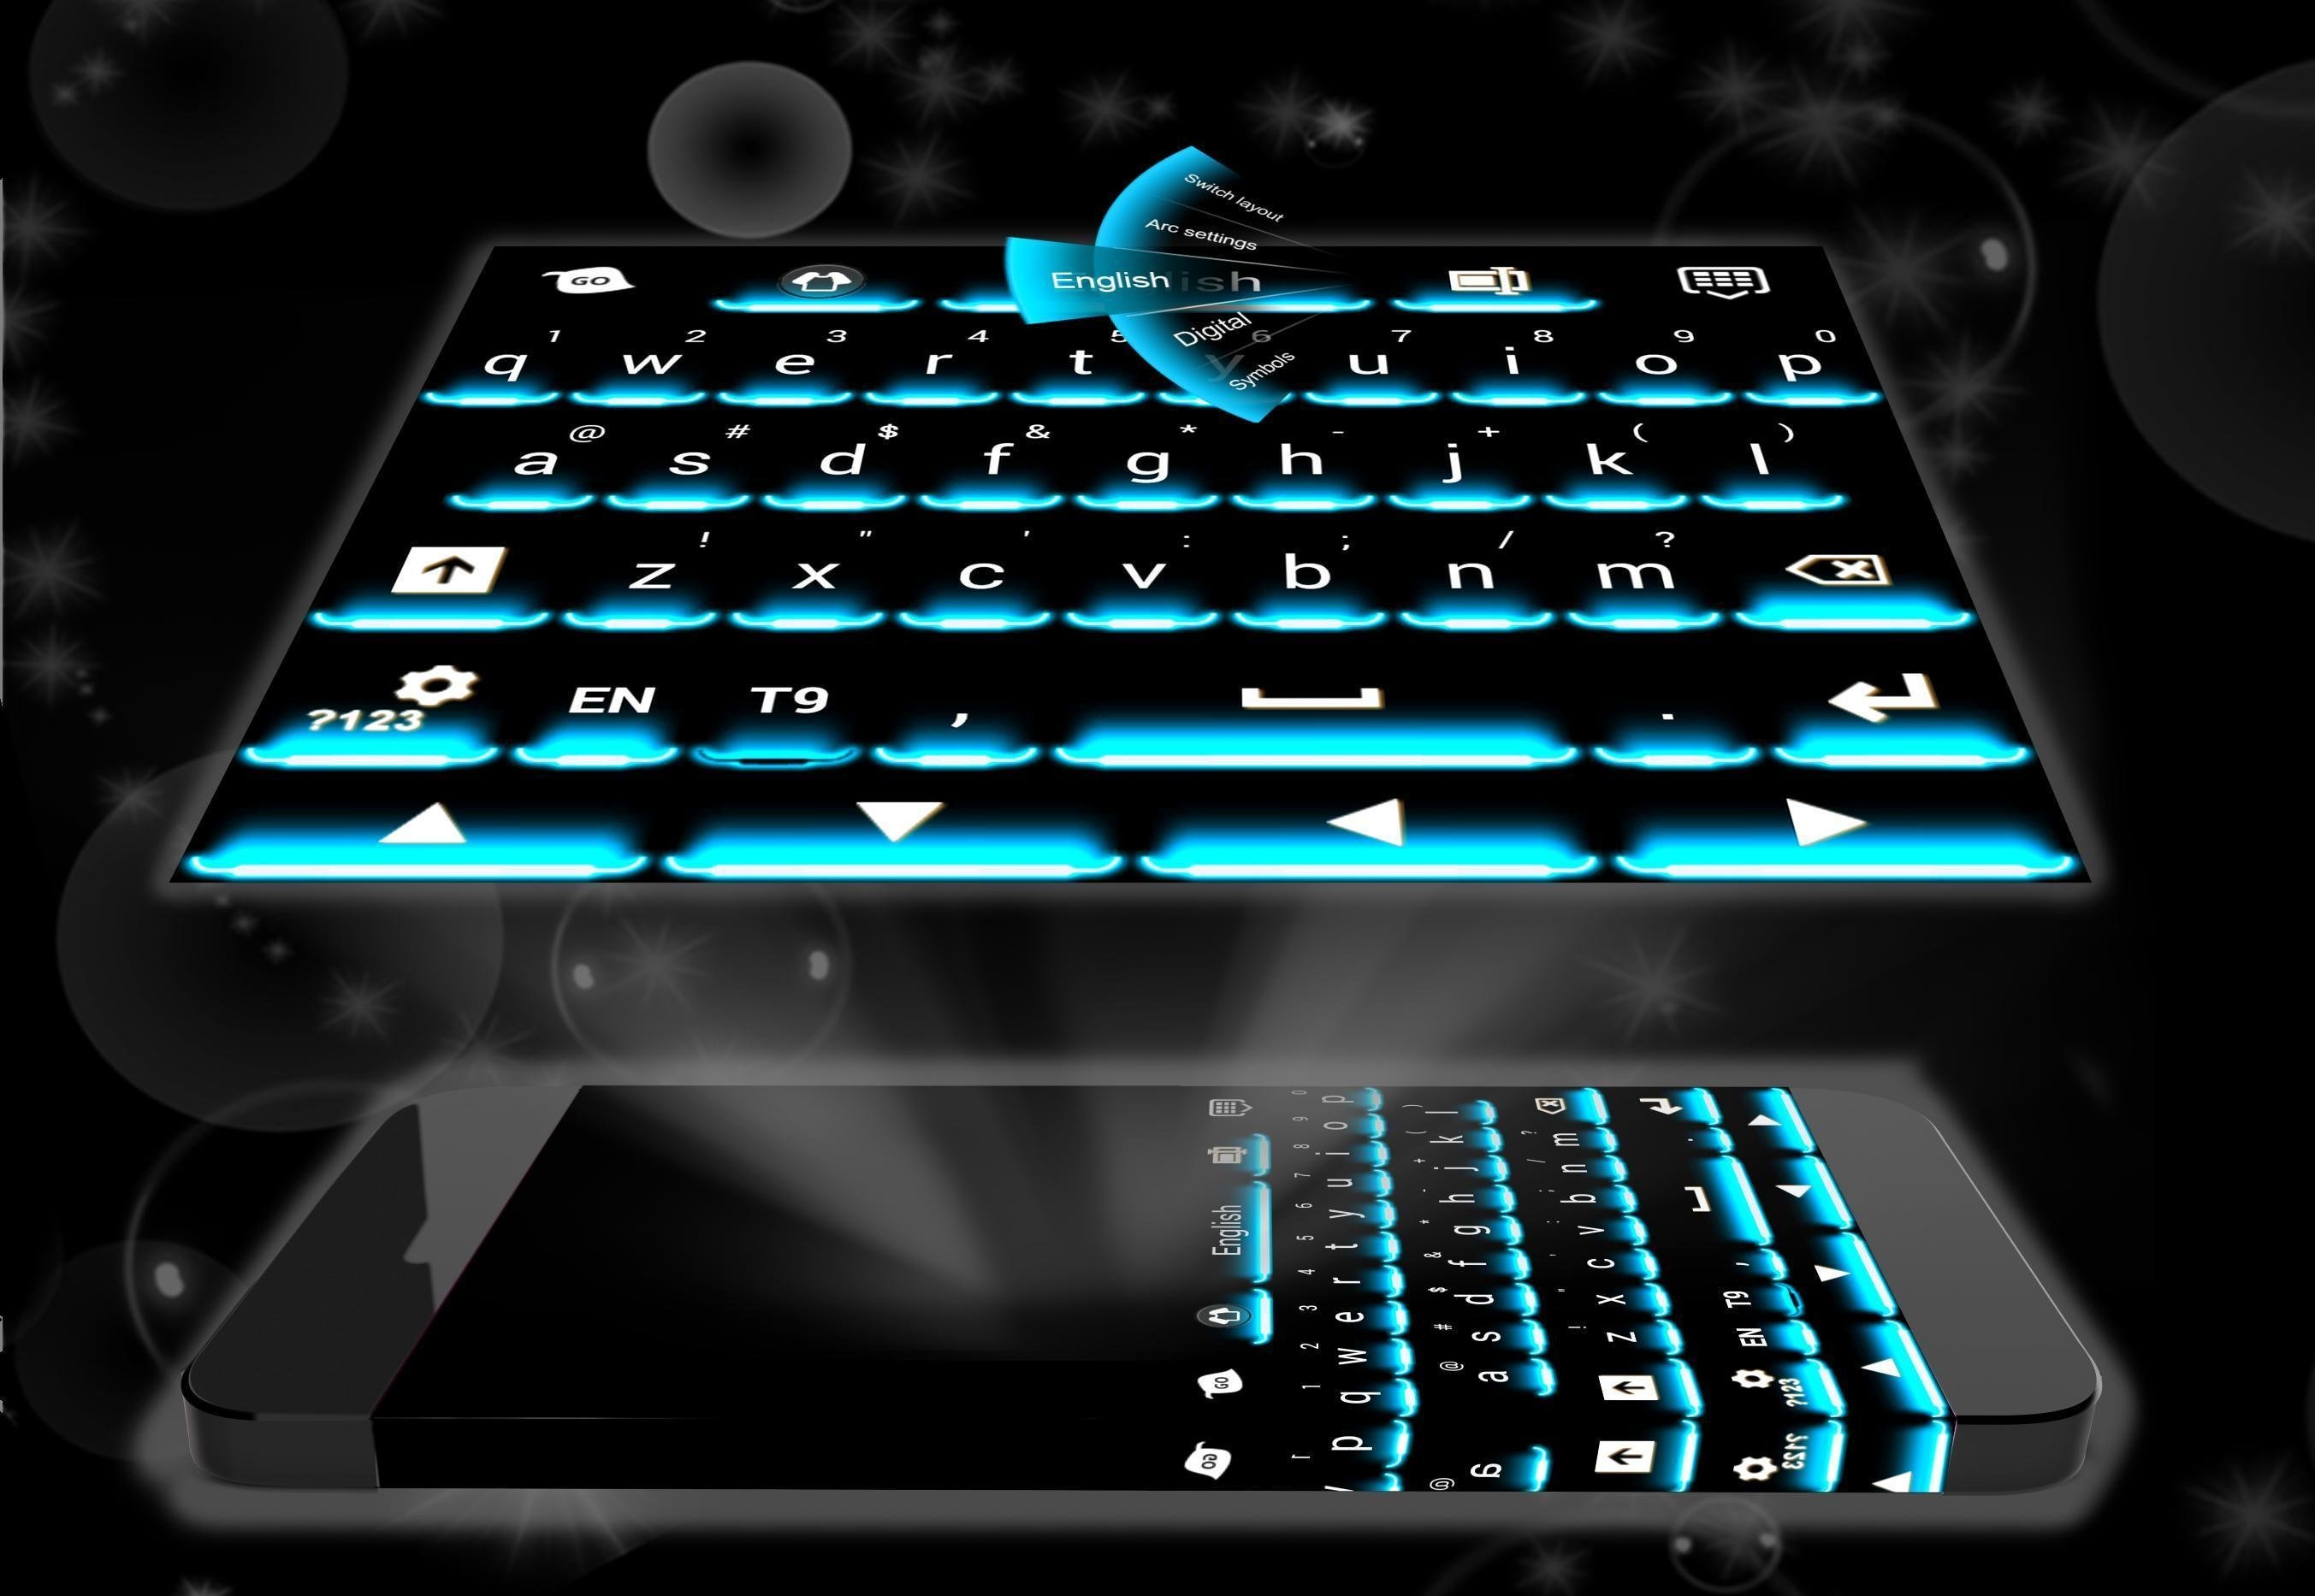 Красивые клавиатуры на андроид